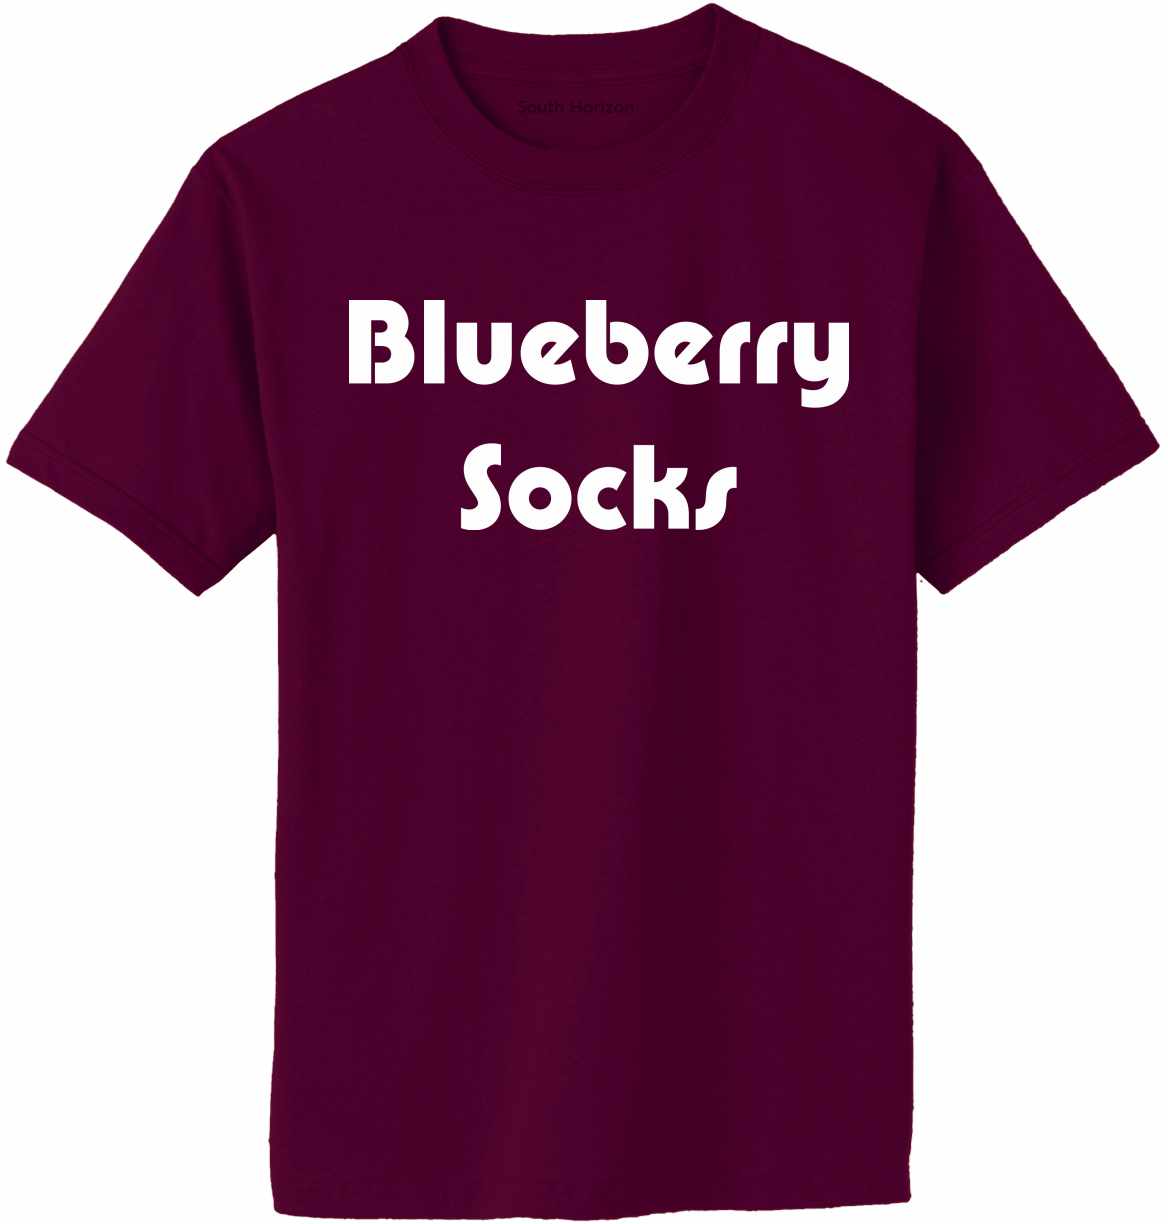 Blueberry Socks Adult T-Shirt